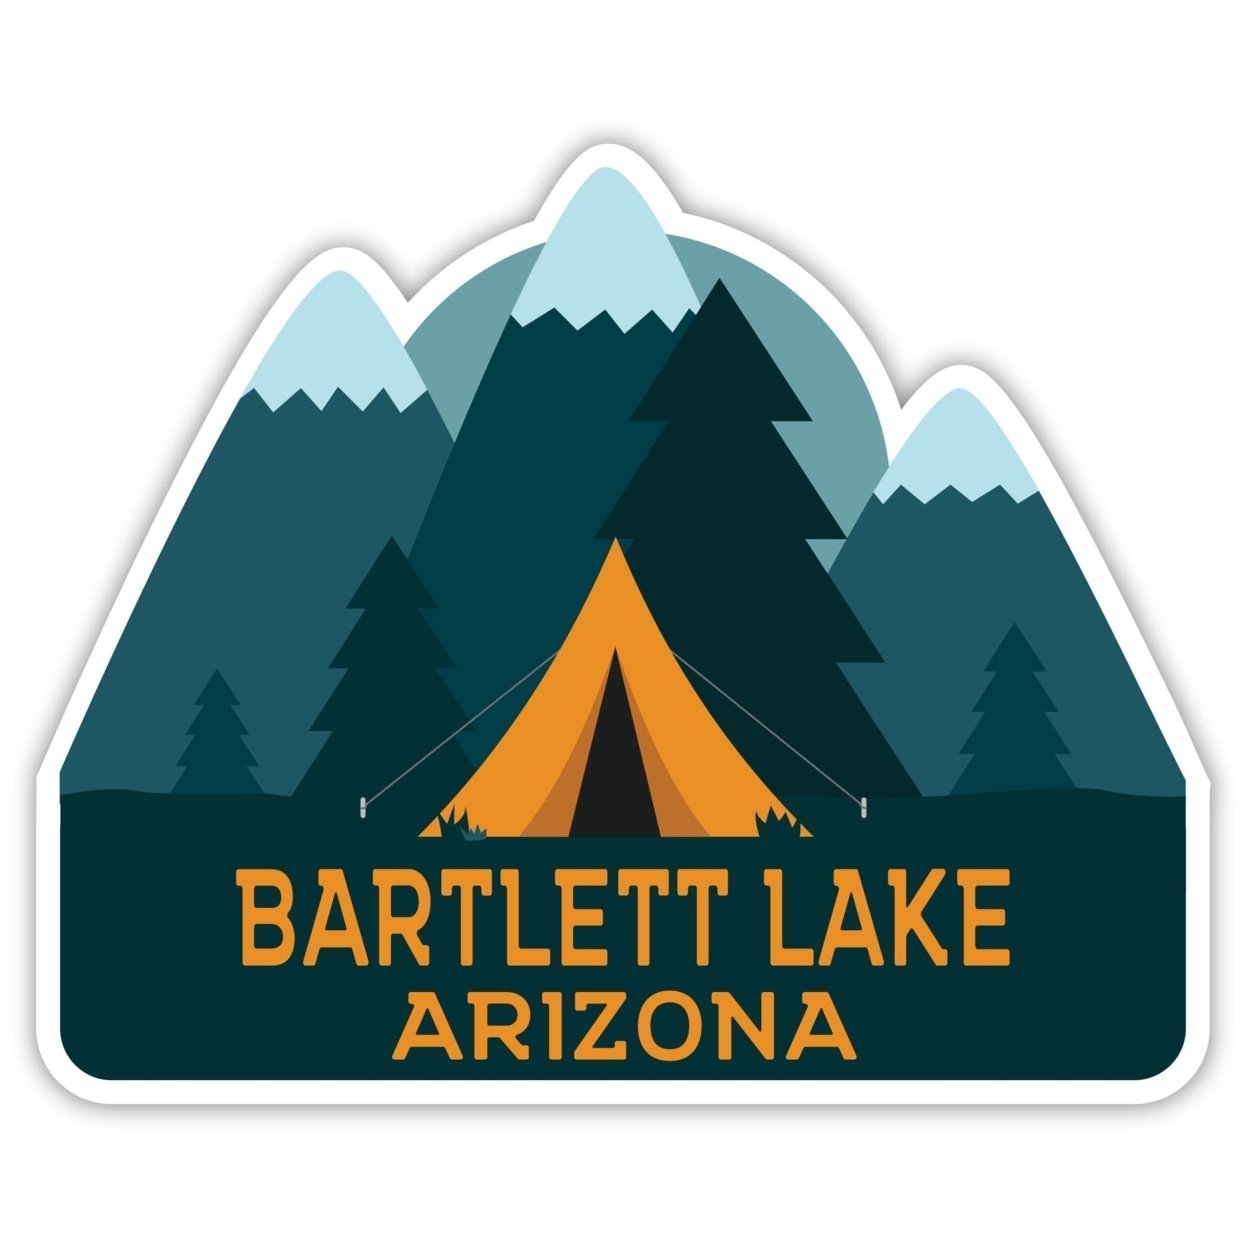 Bartlett Lake Arizona Souvenir Decorative Stickers (Choose Theme And Size) - 4-Pack, 2-Inch, Tent